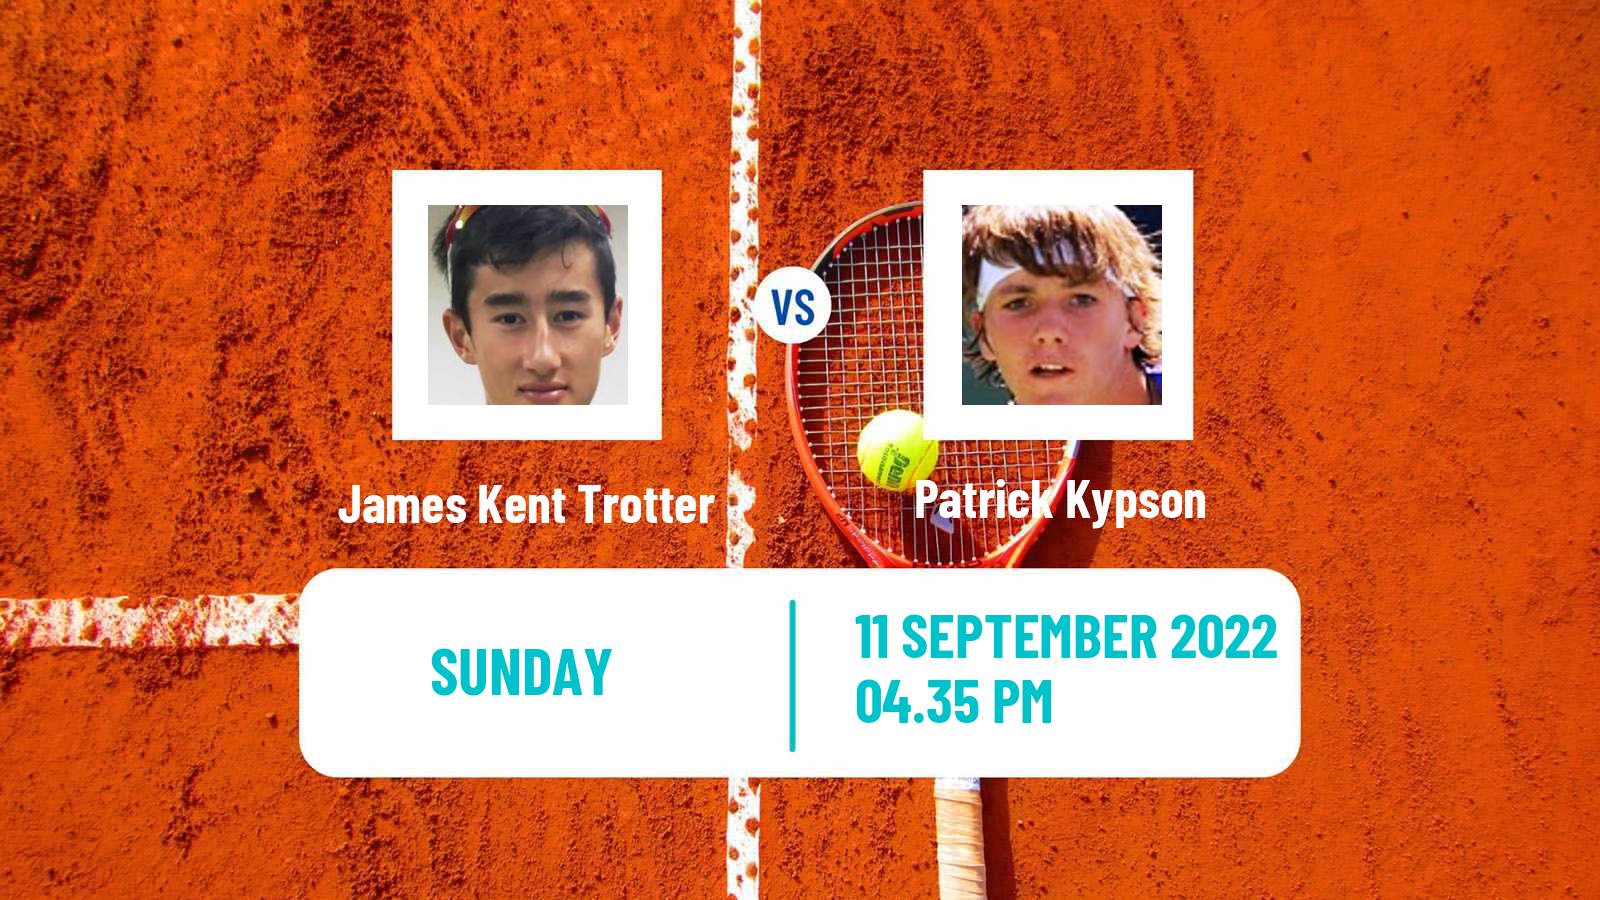 Tennis ATP Challenger James Kent Trotter - Patrick Kypson